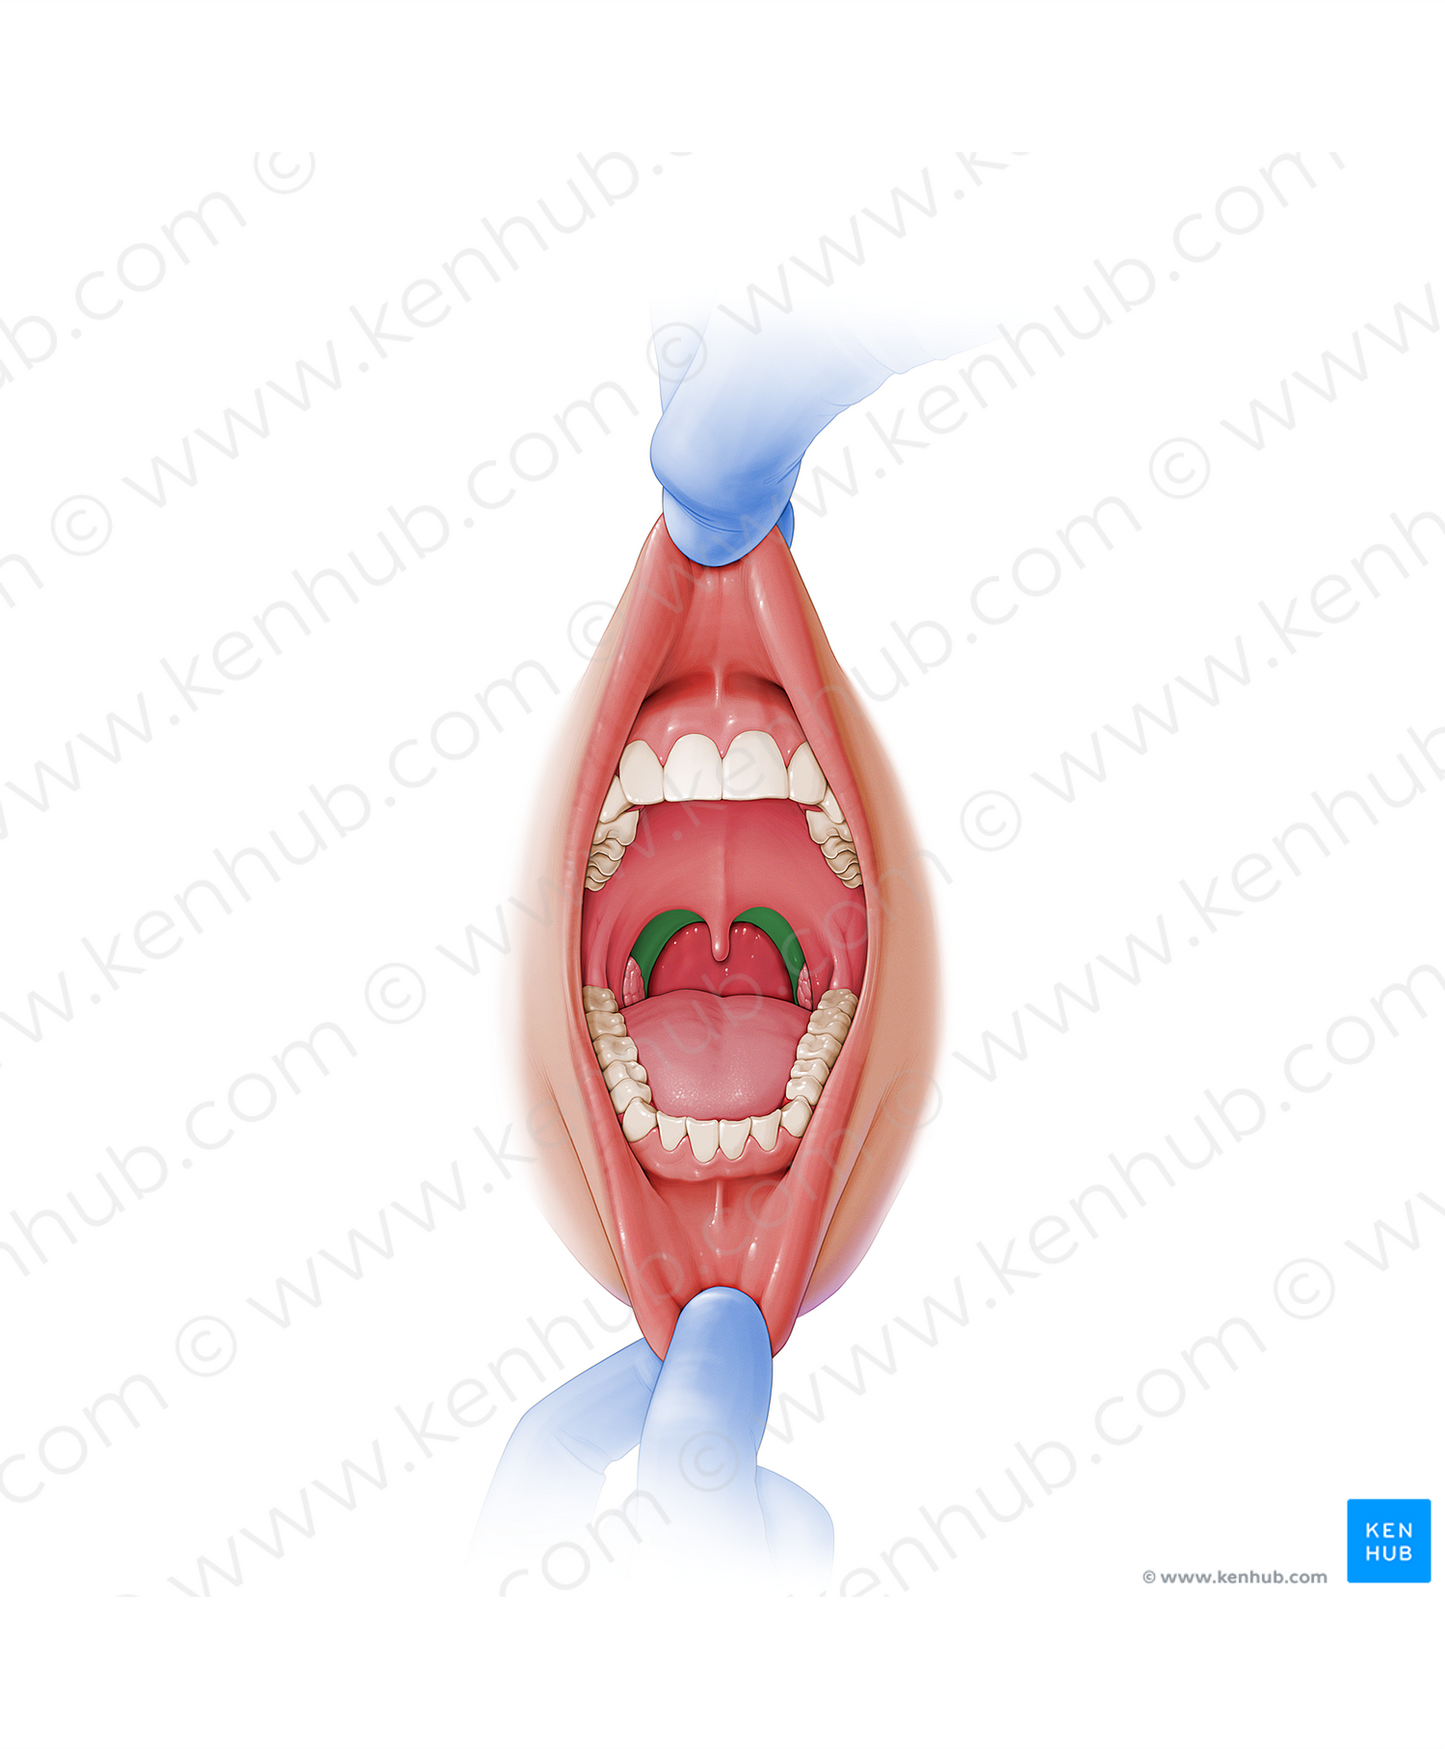 Palatopharyngeal arch (#844)